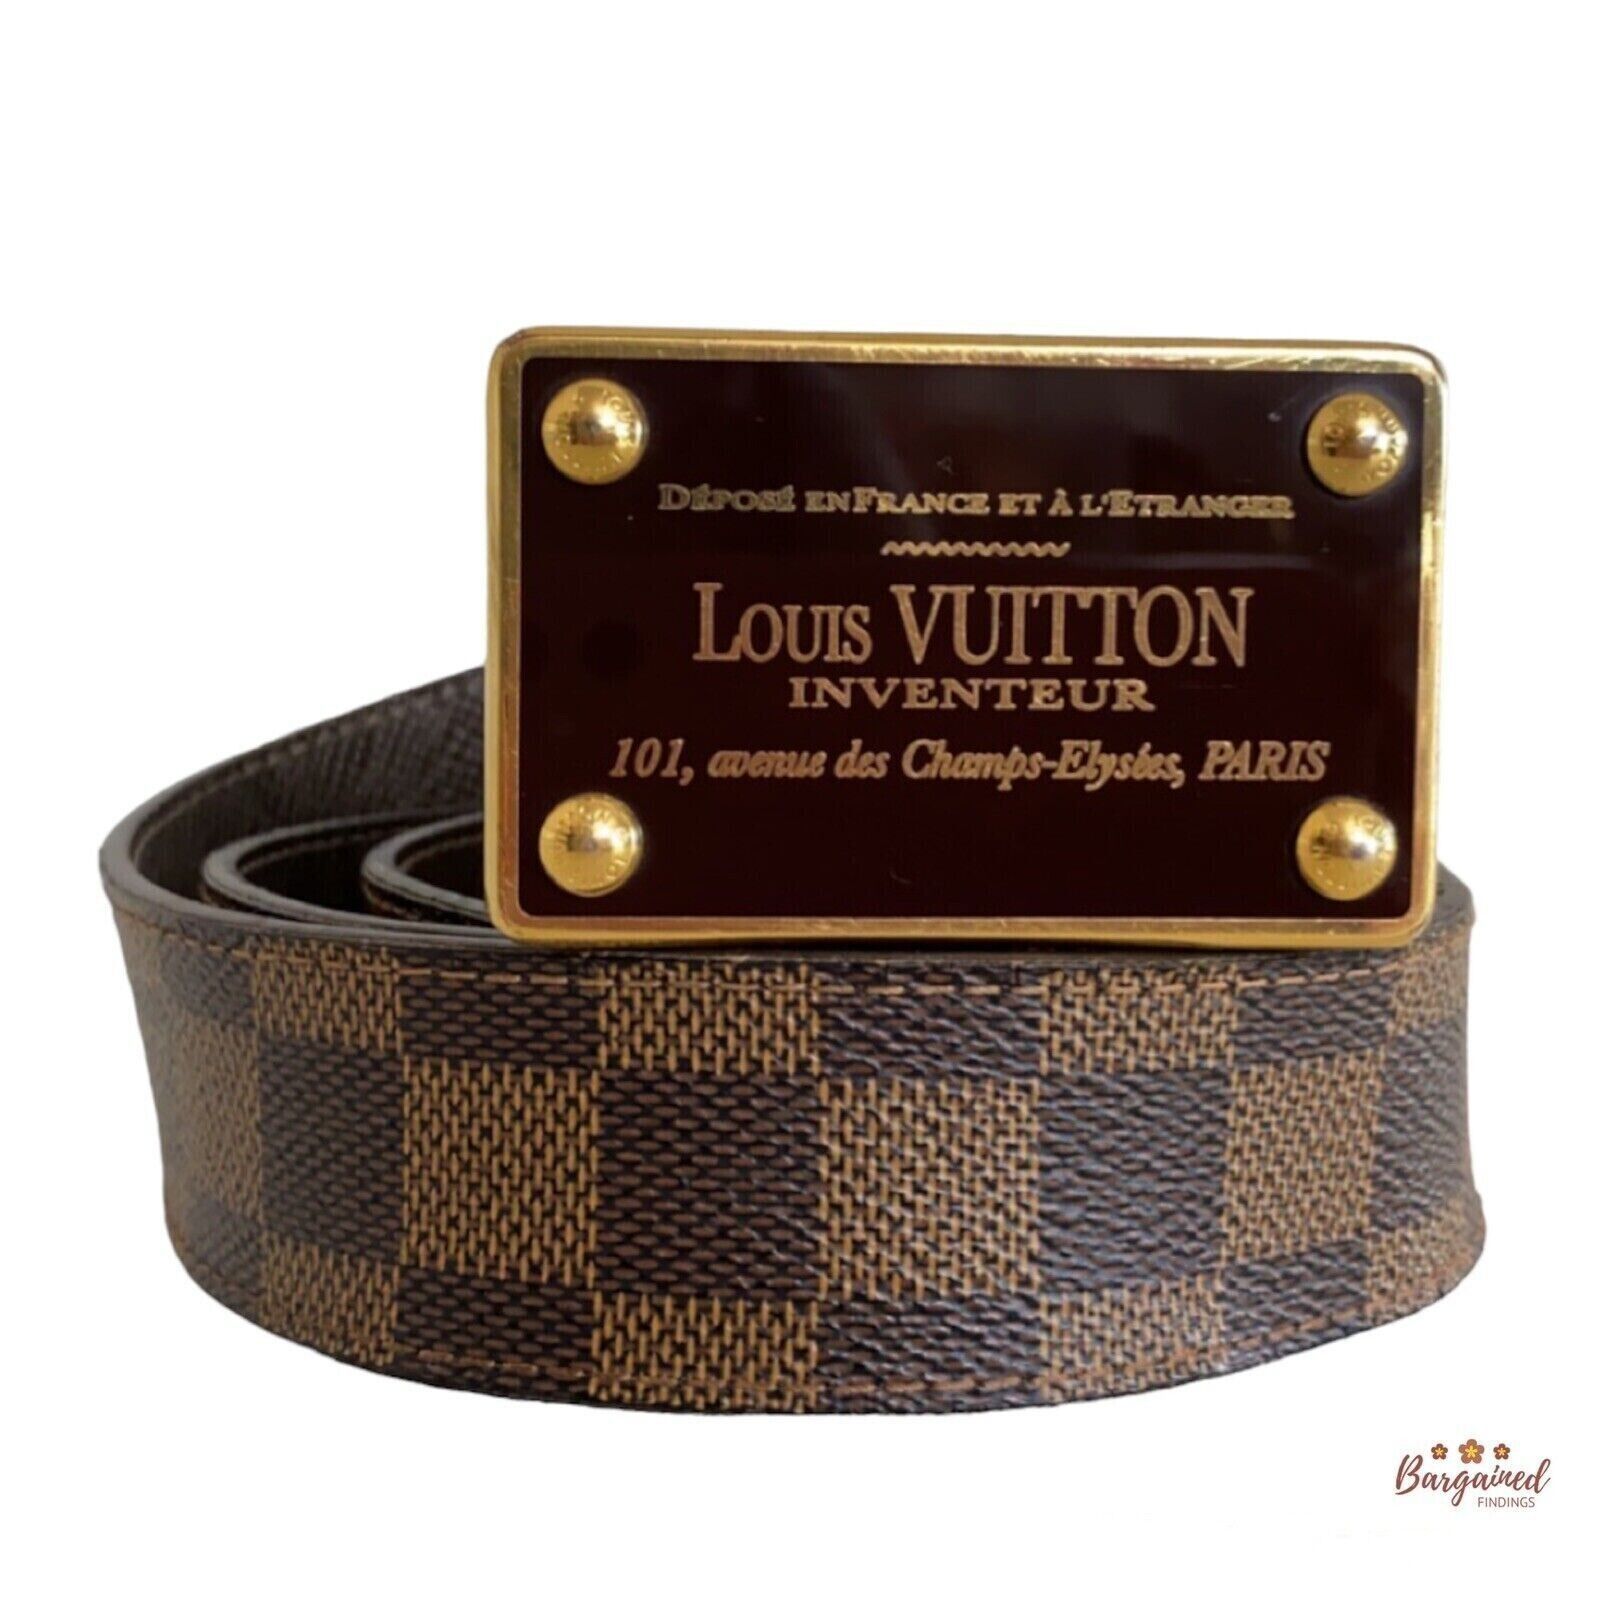 Sell Louis Vuitton Reversible Damier Ebene Inventeur Belt - Brown